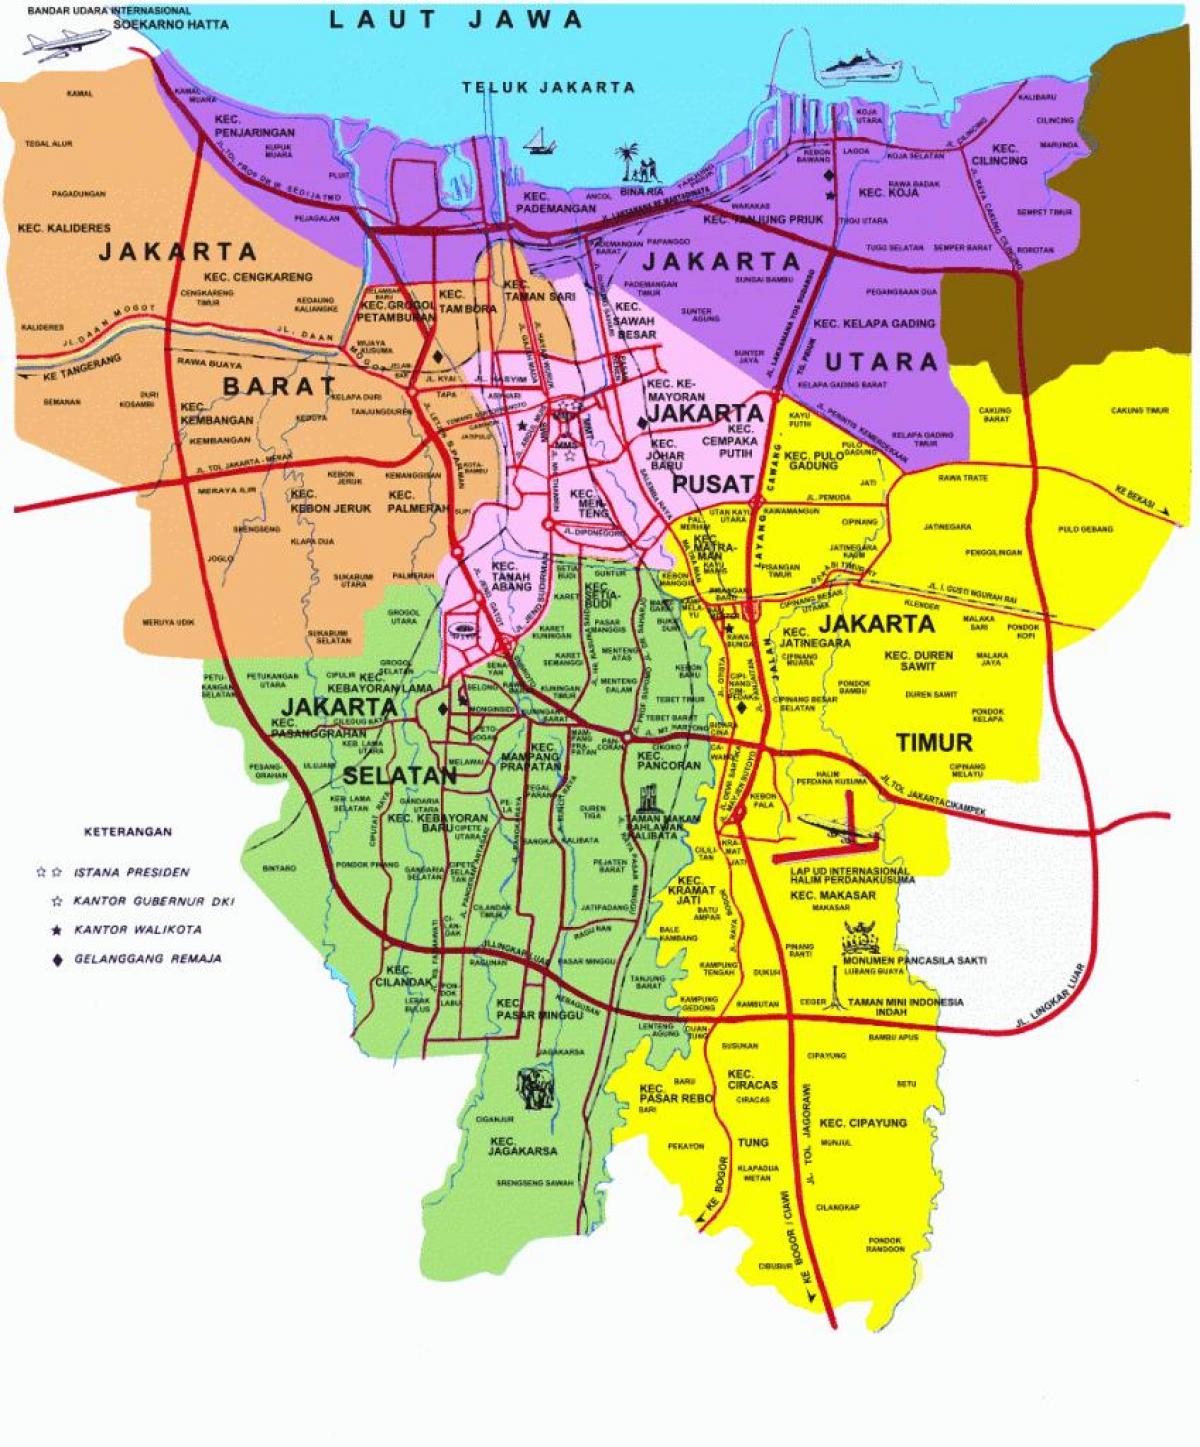 bản đồ của Jakarta hấp dẫn